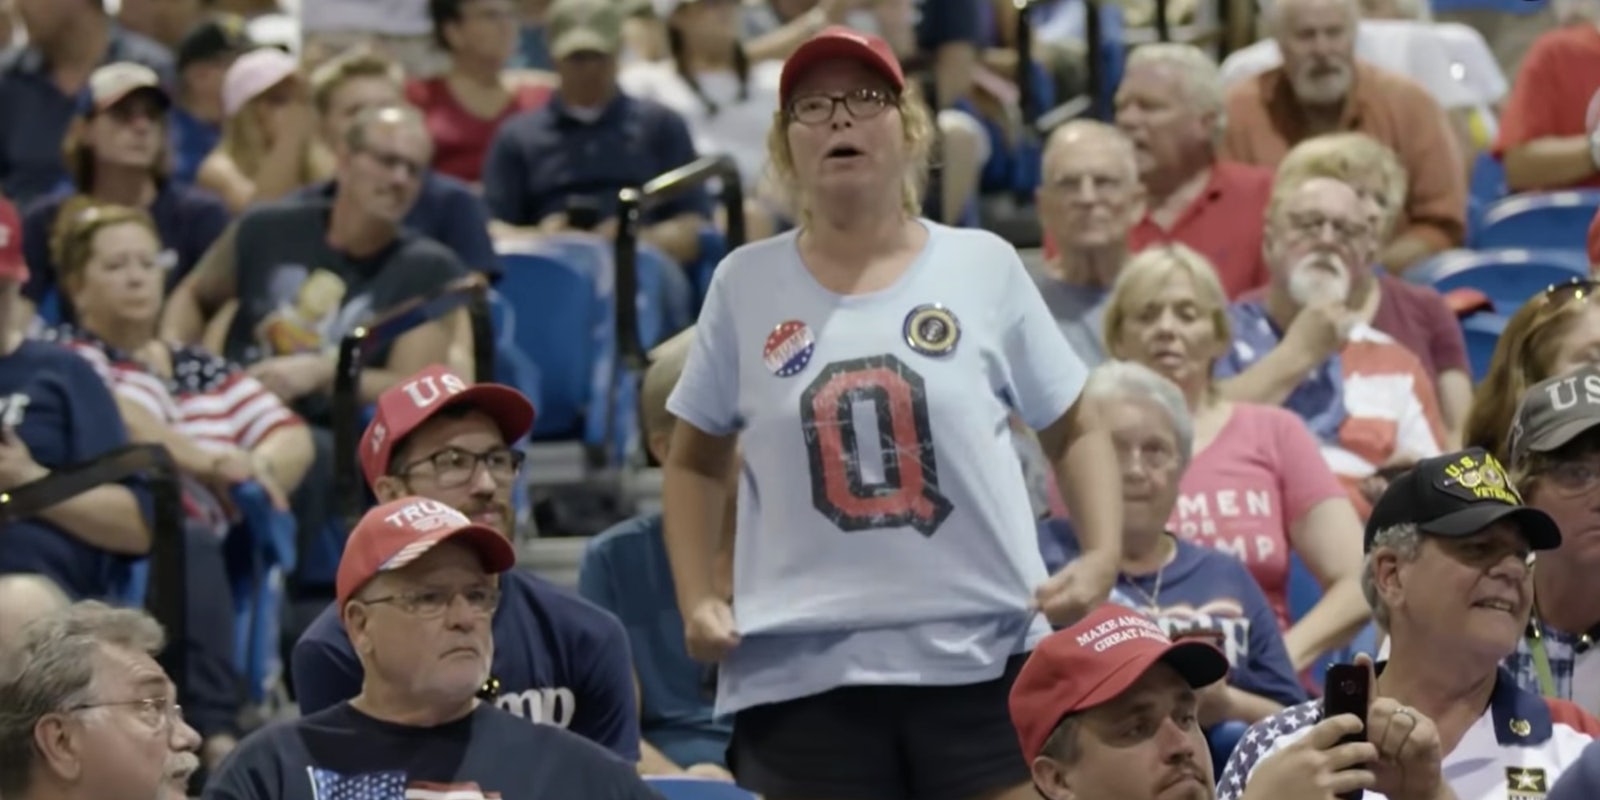 A woman wearing a QAnon t-shirt at a Trump rally